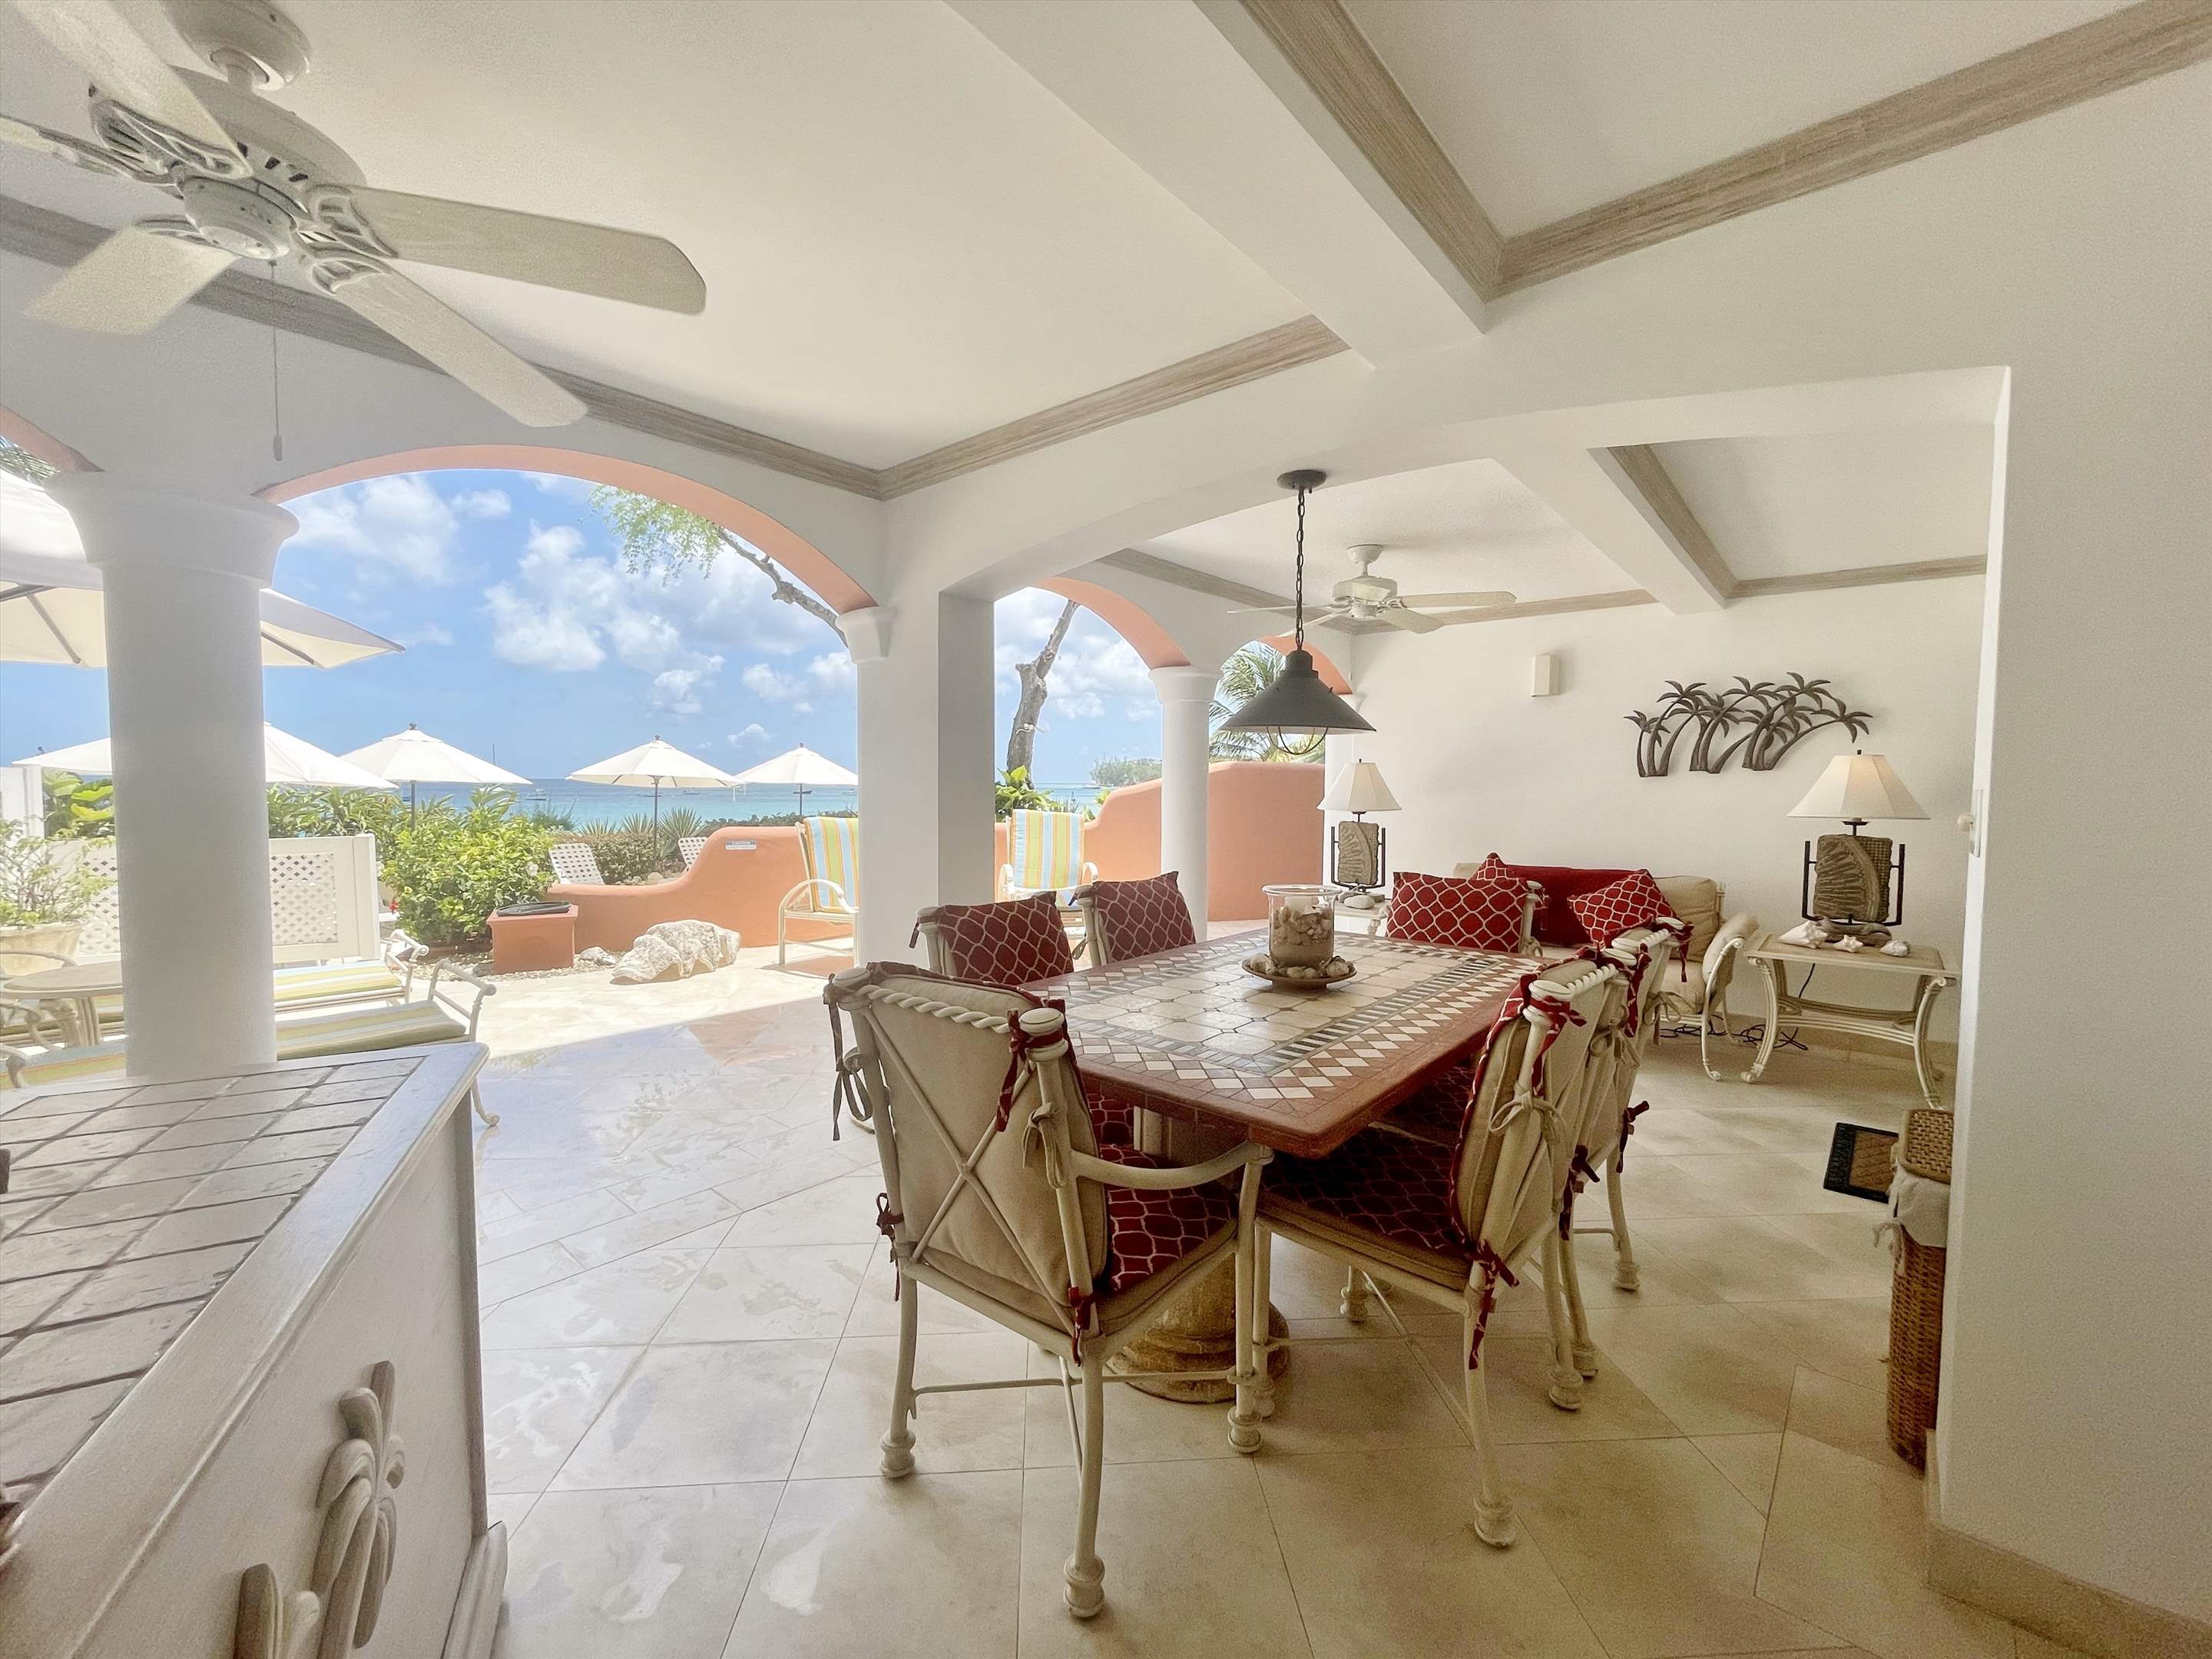 Villas on the Beach 101, 1 bedroom, 1 bedroom apartment in St. James & West Coast, Barbados Photo #2